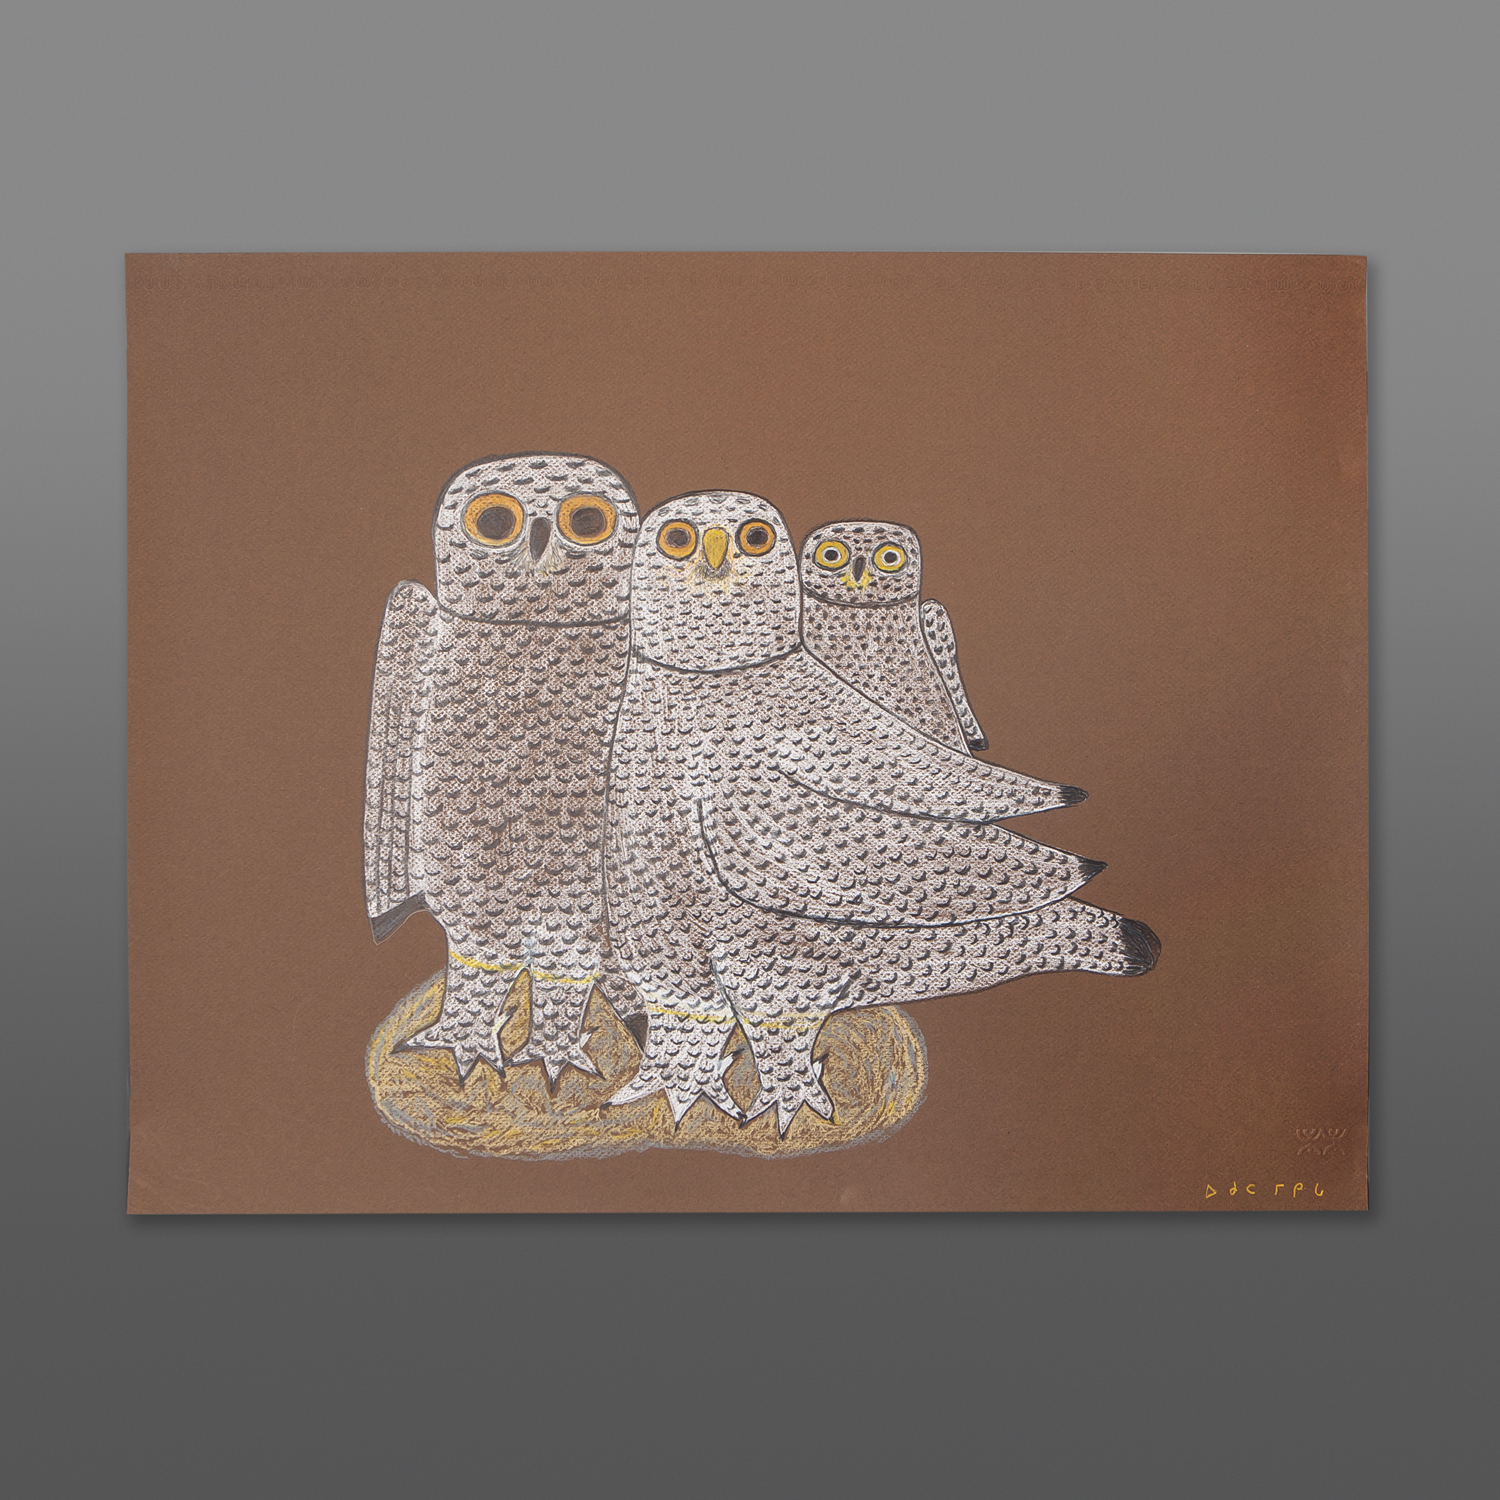 Arctic Owl Family
Ohotaq Mikkigak 
Inuit
Colored pencil on paper
19½” x 25½”
700CAD